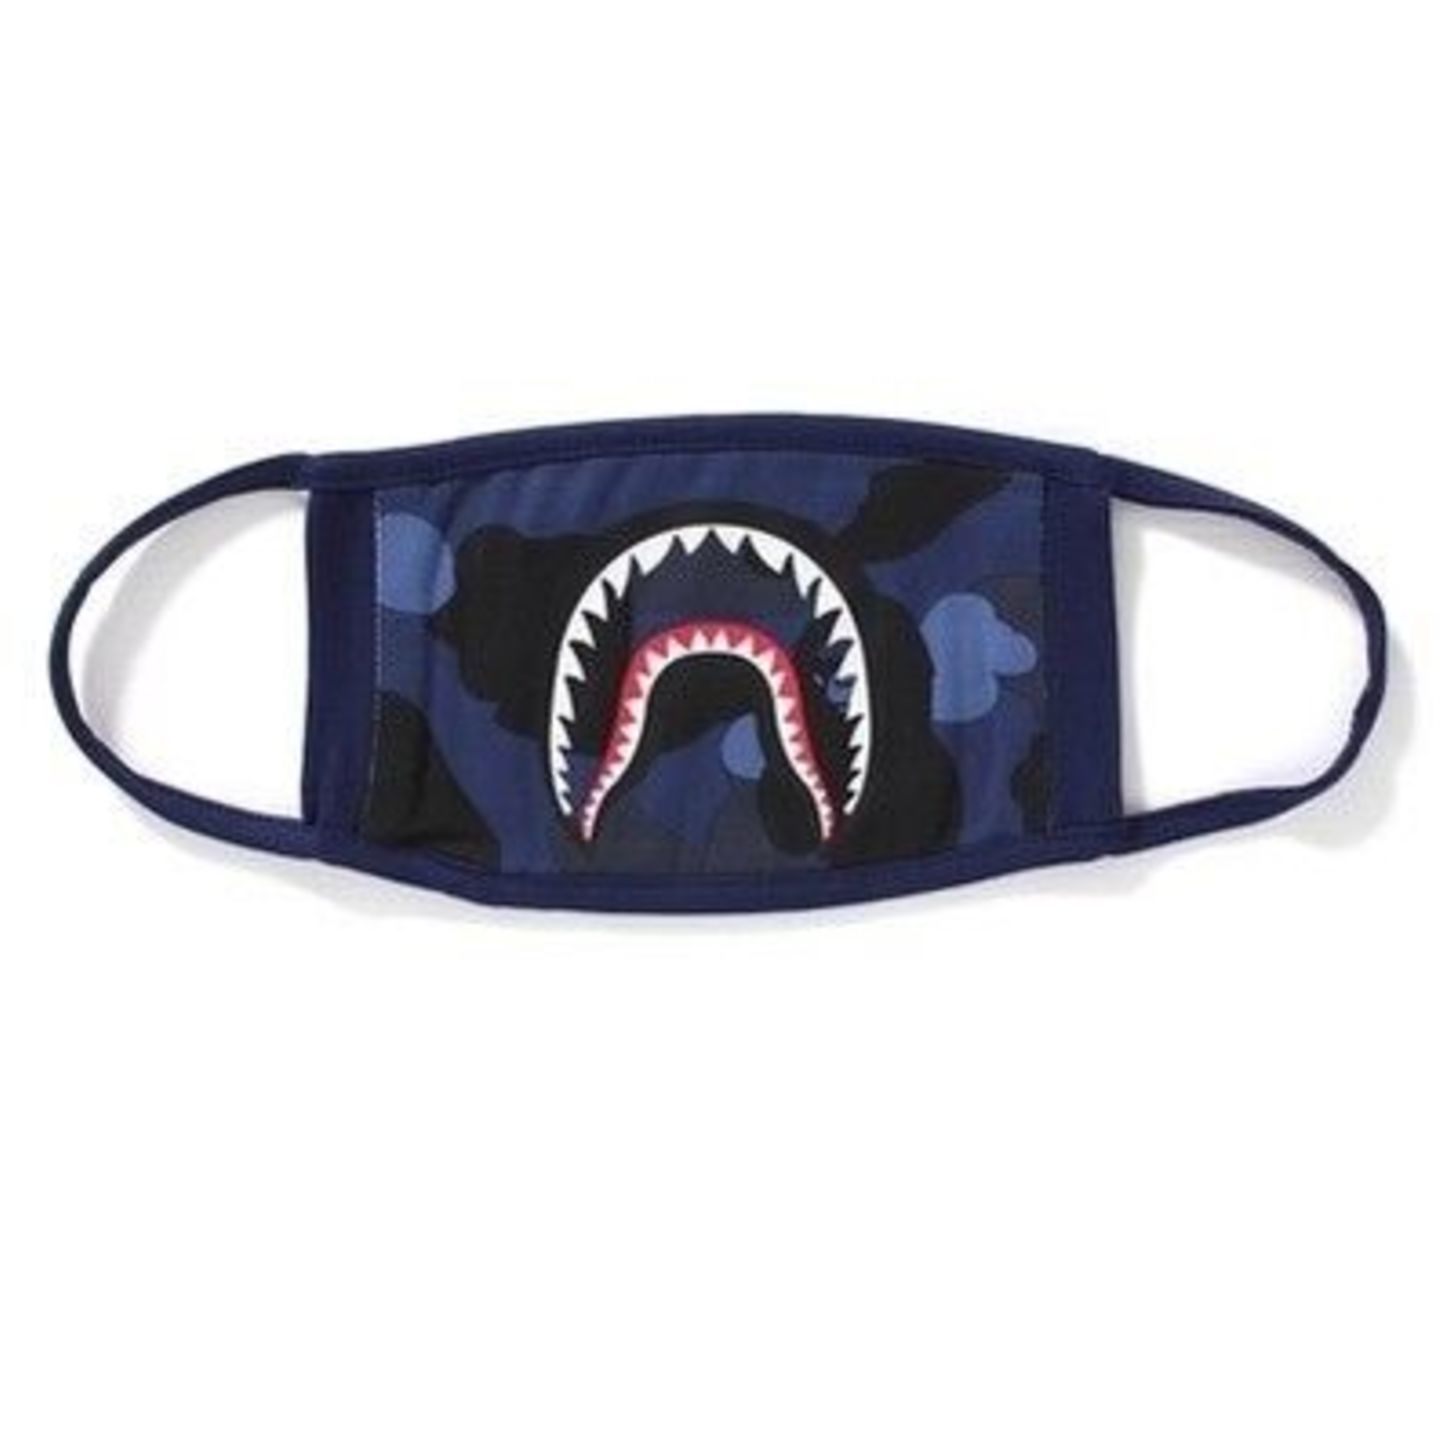 Bape Shark Face Mask Camouflage Mouth-muffle